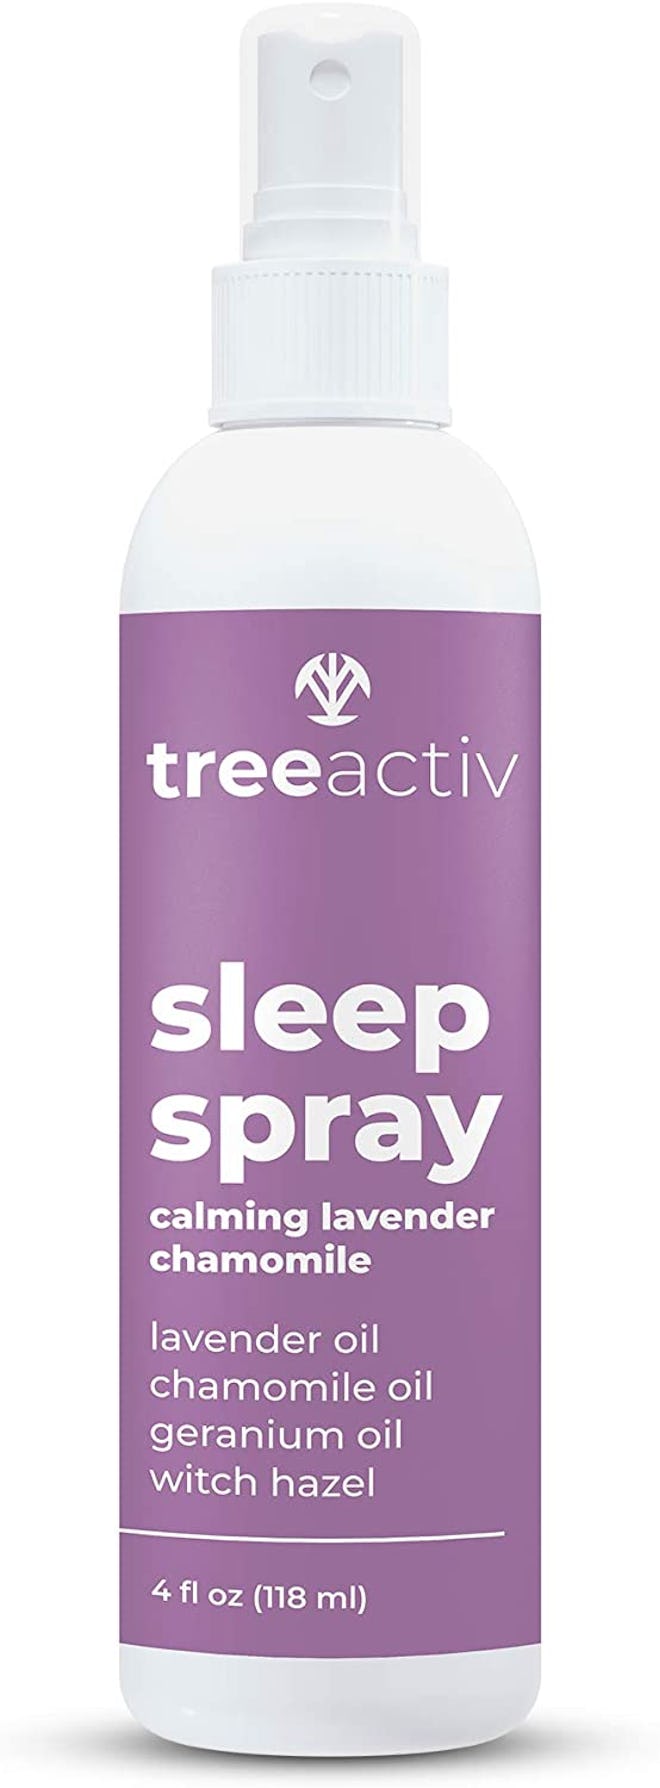 TreeActiv Aromatherapy Pillow and Sheet Spray